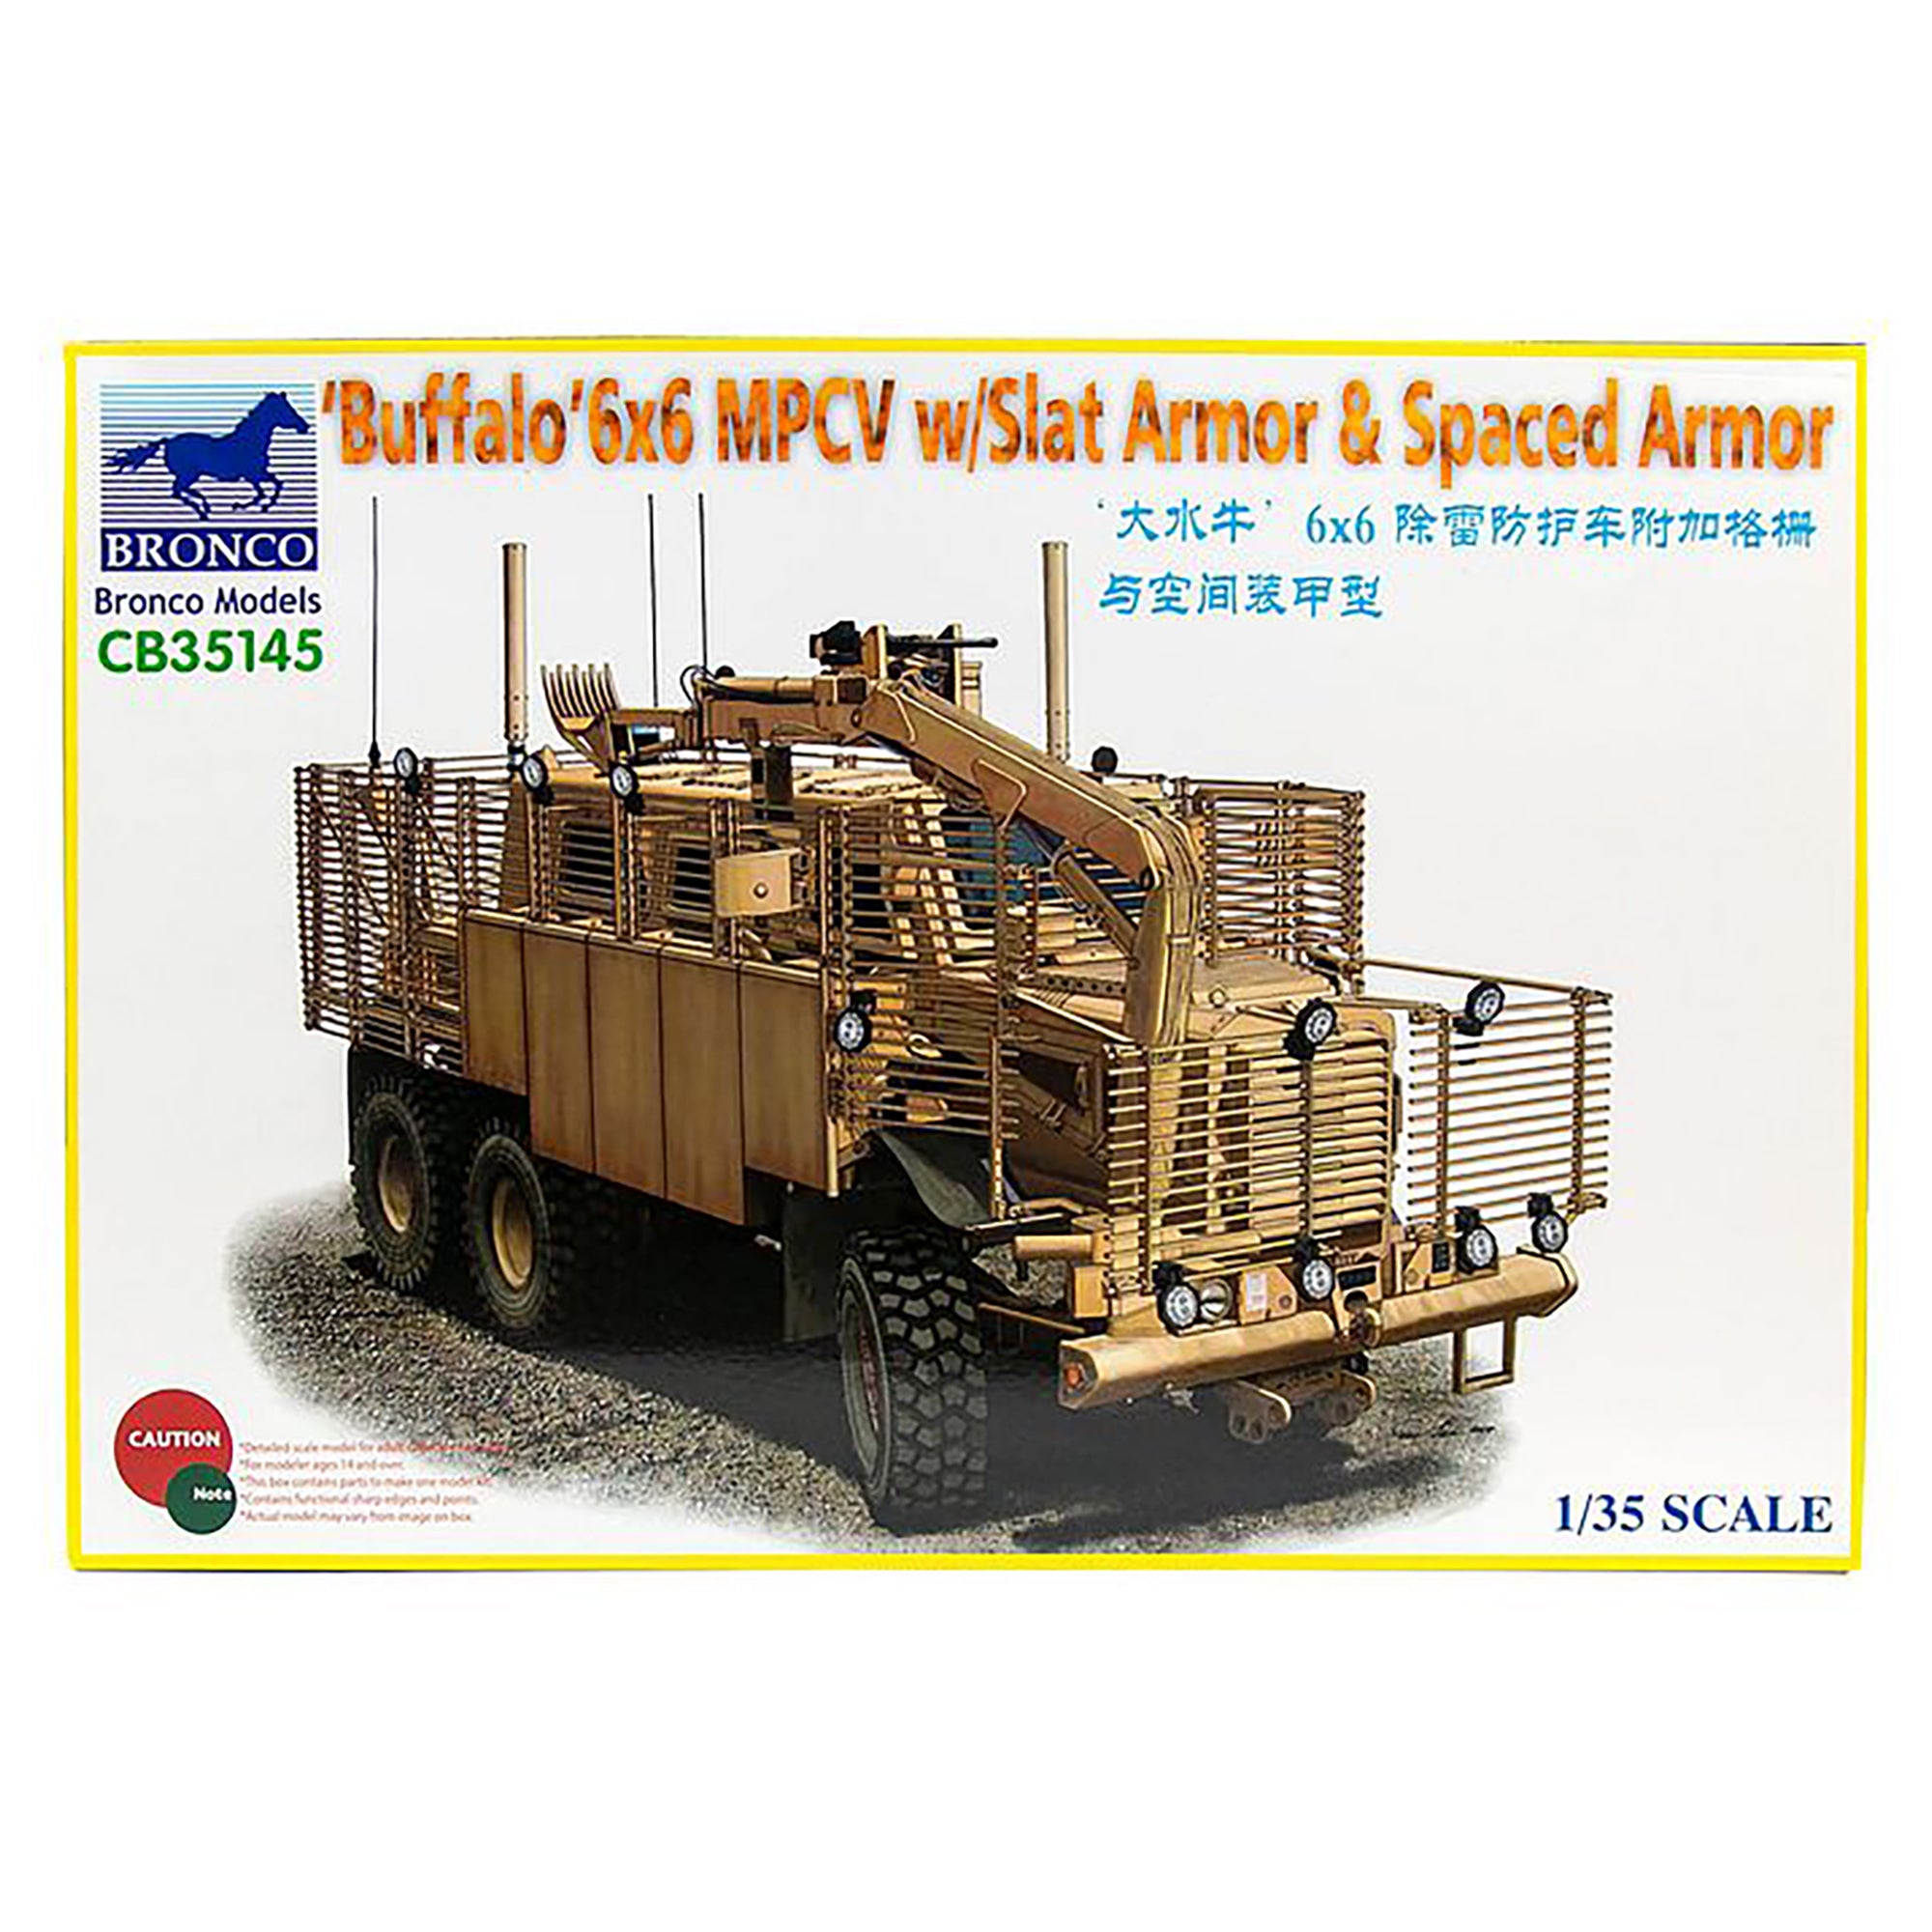 Bronco CB35145 1/35 'Buffalo' 6x6 MPCV with Slat Armor & Spaced Armor Model Kit